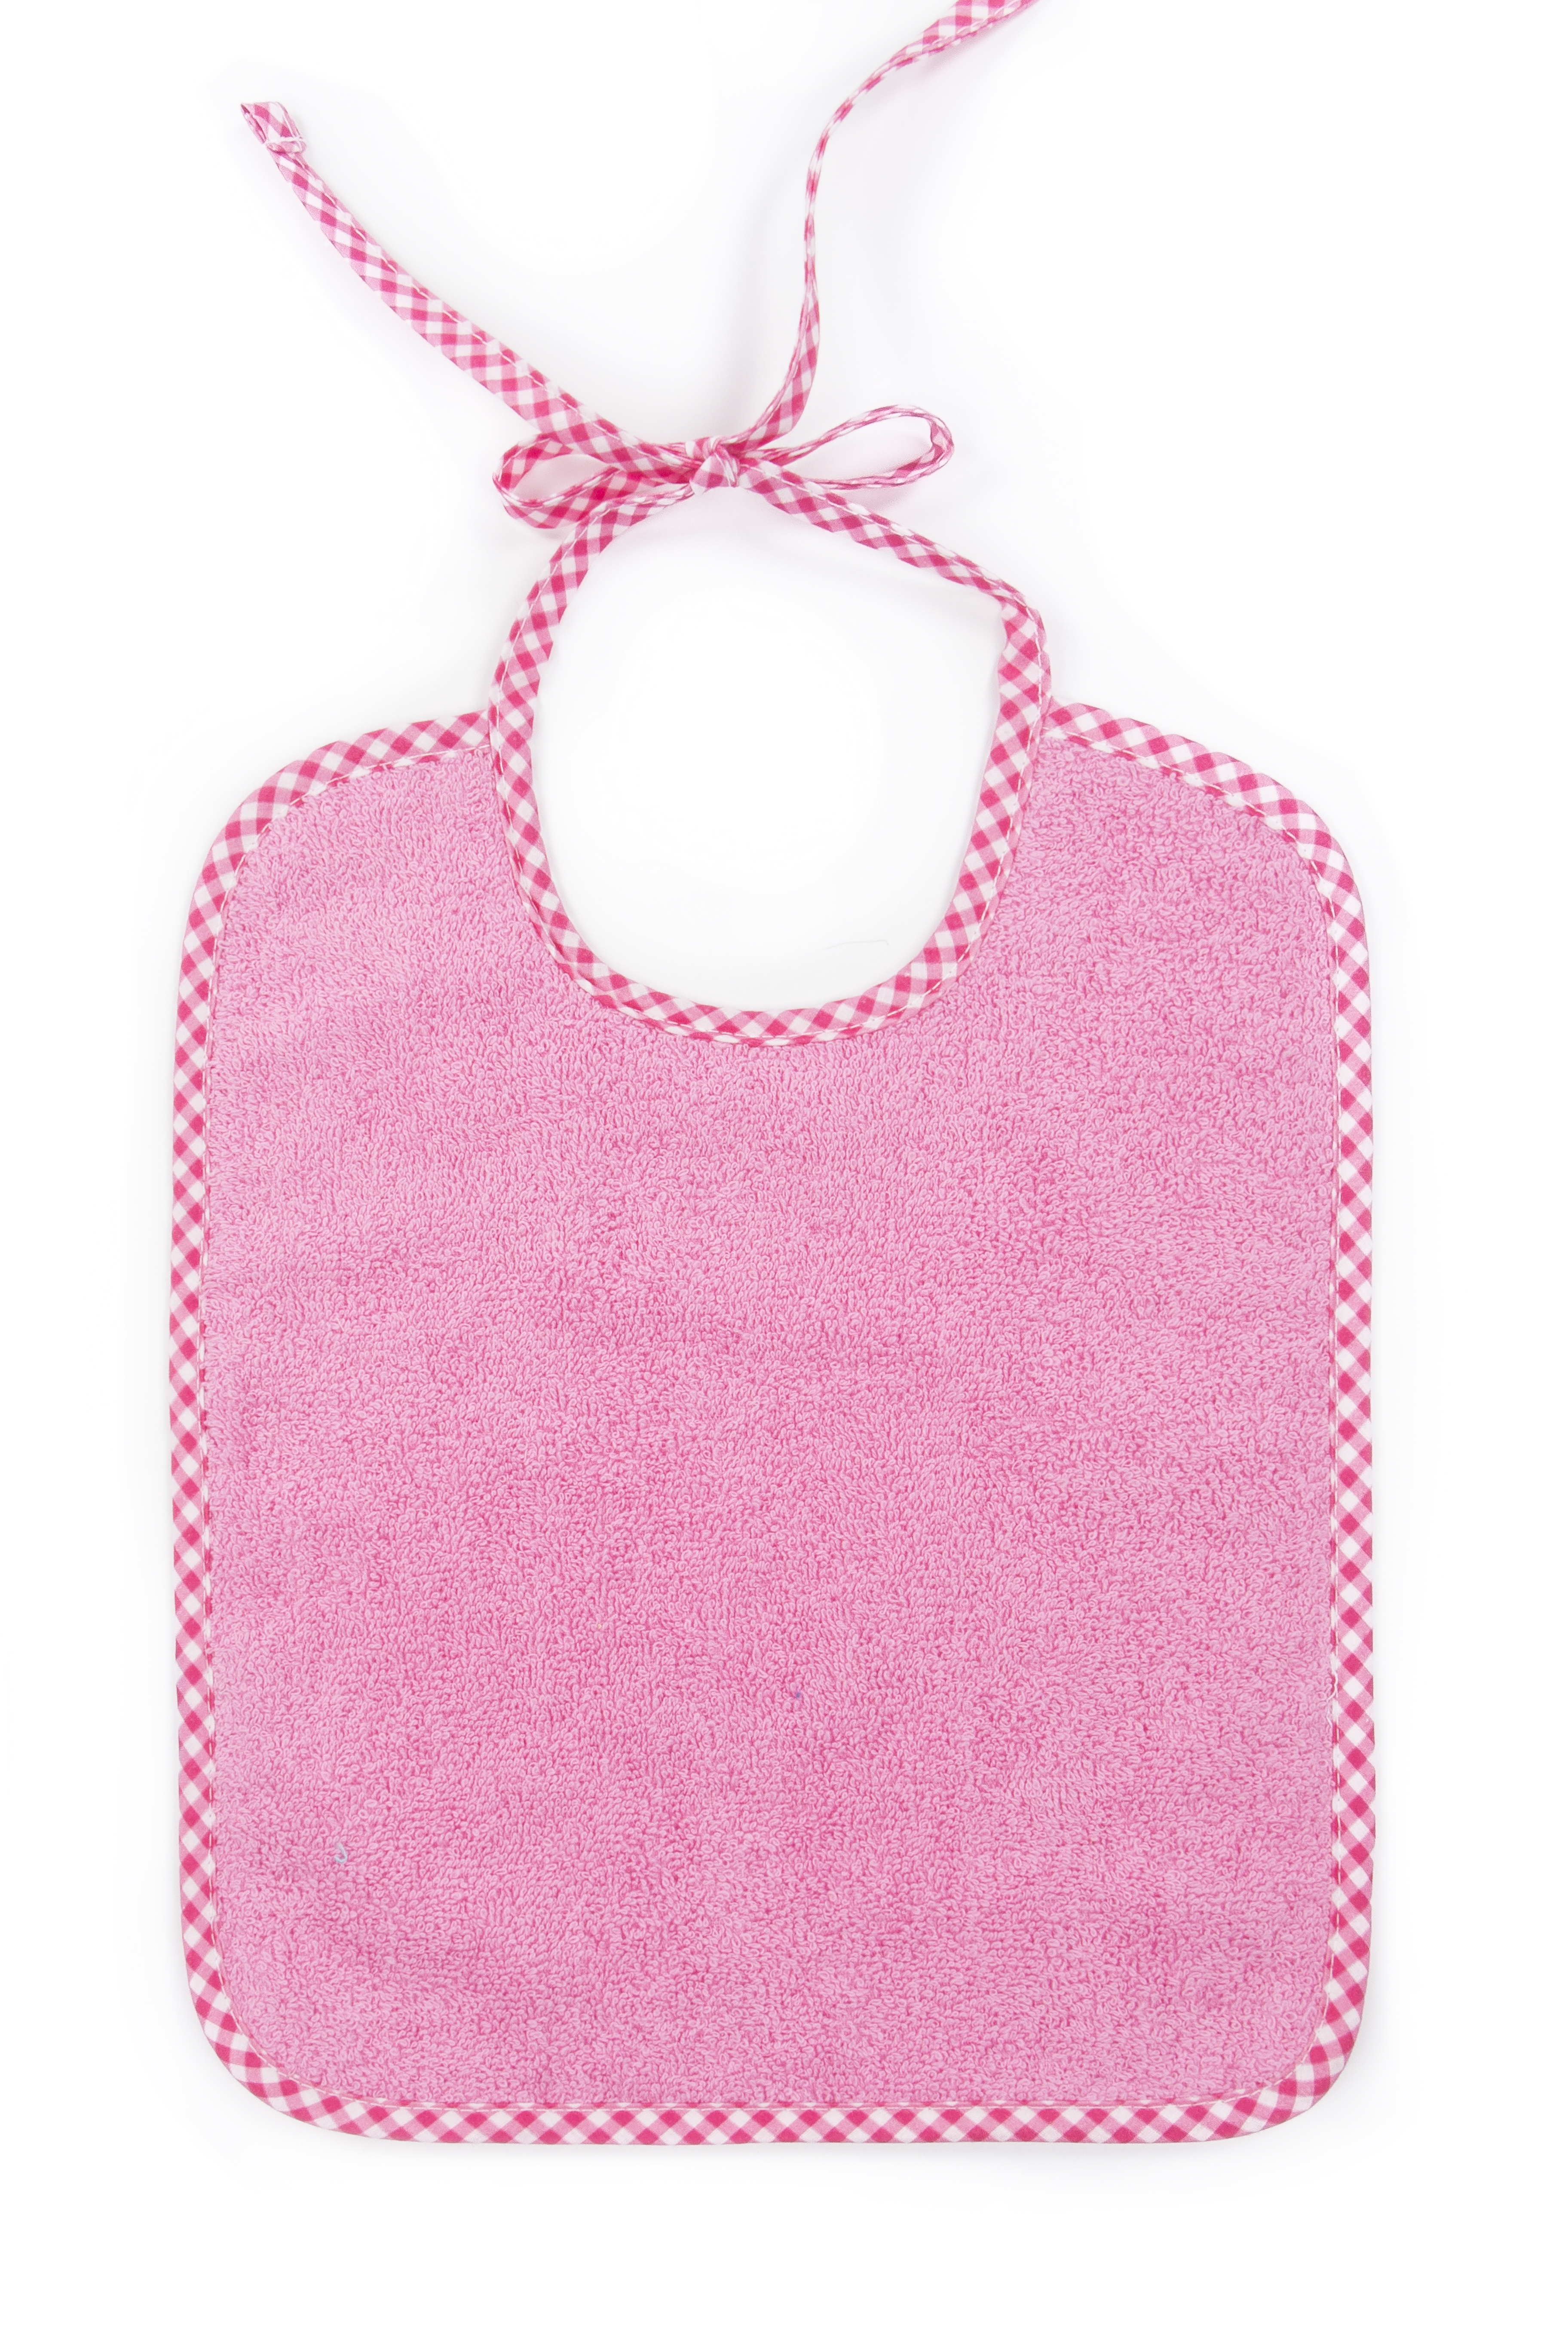 Bib with straps Girl, uni pink, 35x27 cm 